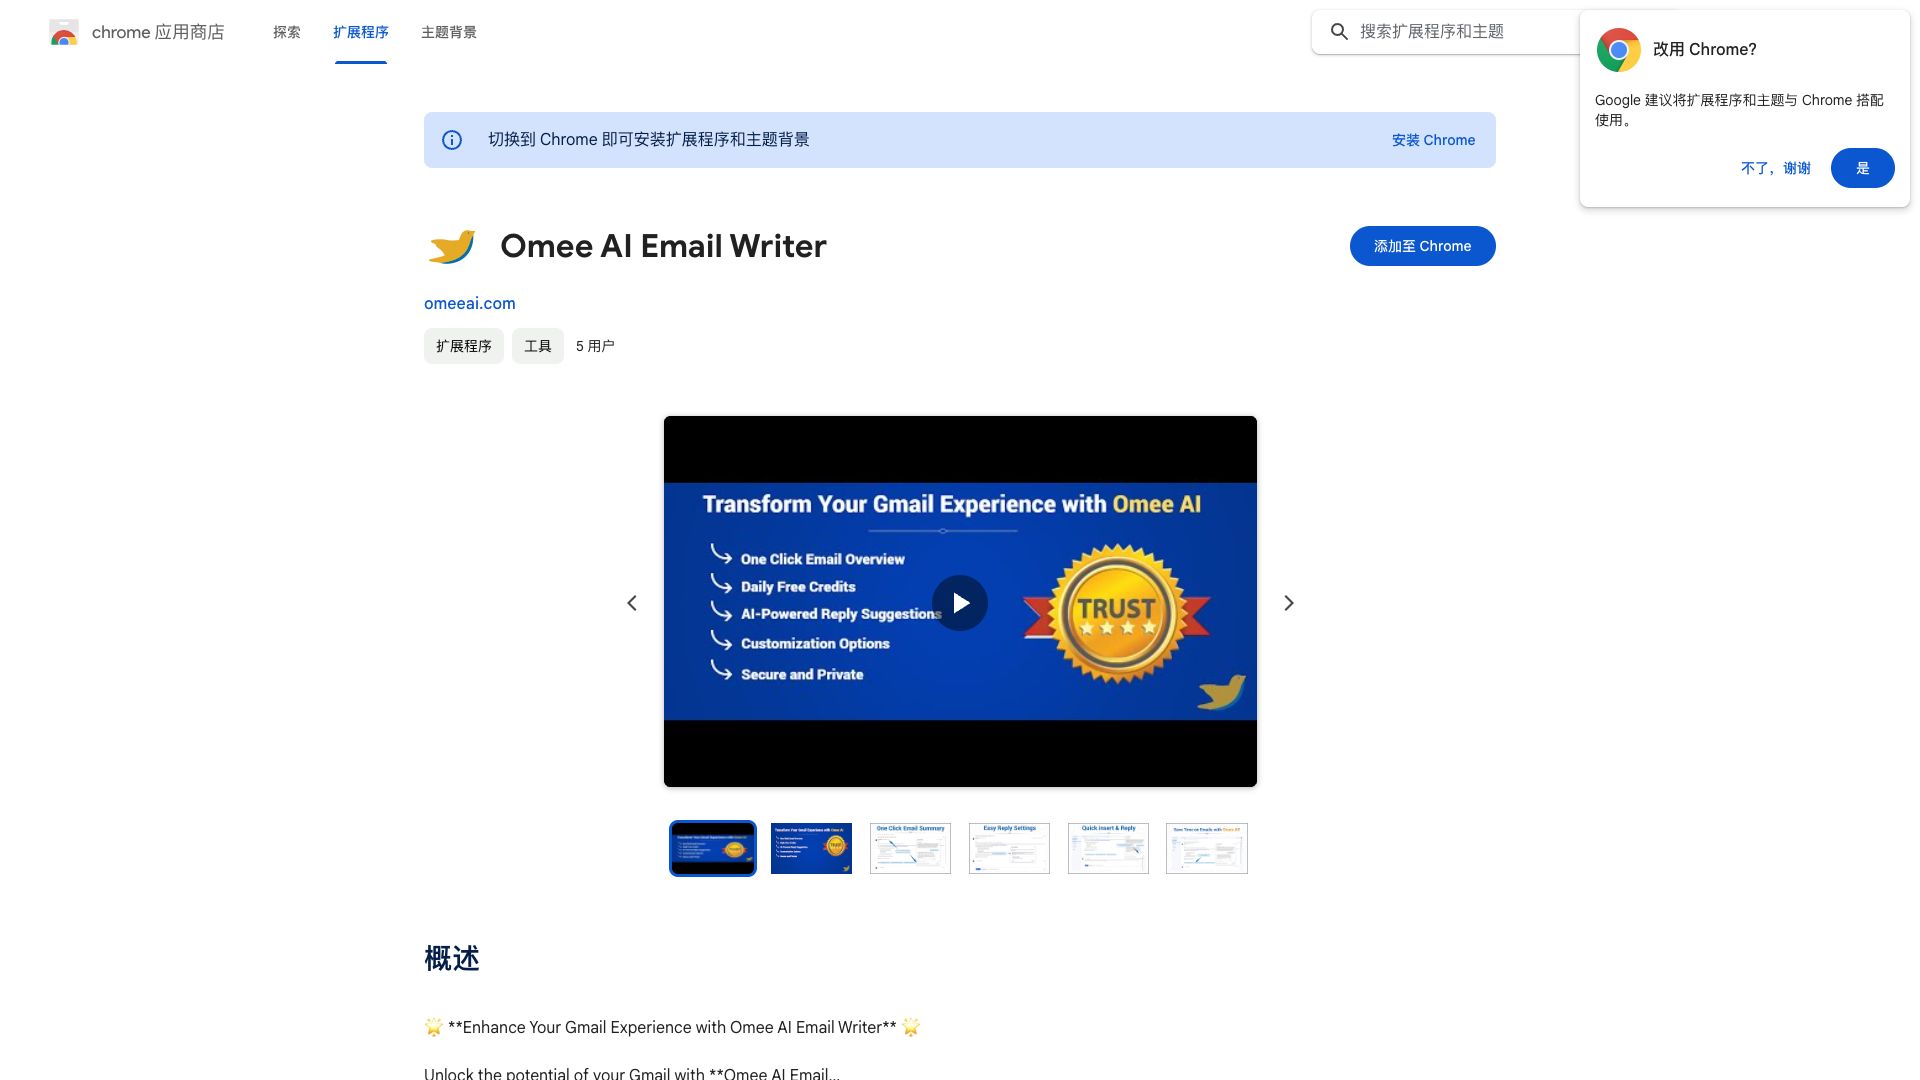 Omee AI Email Writer